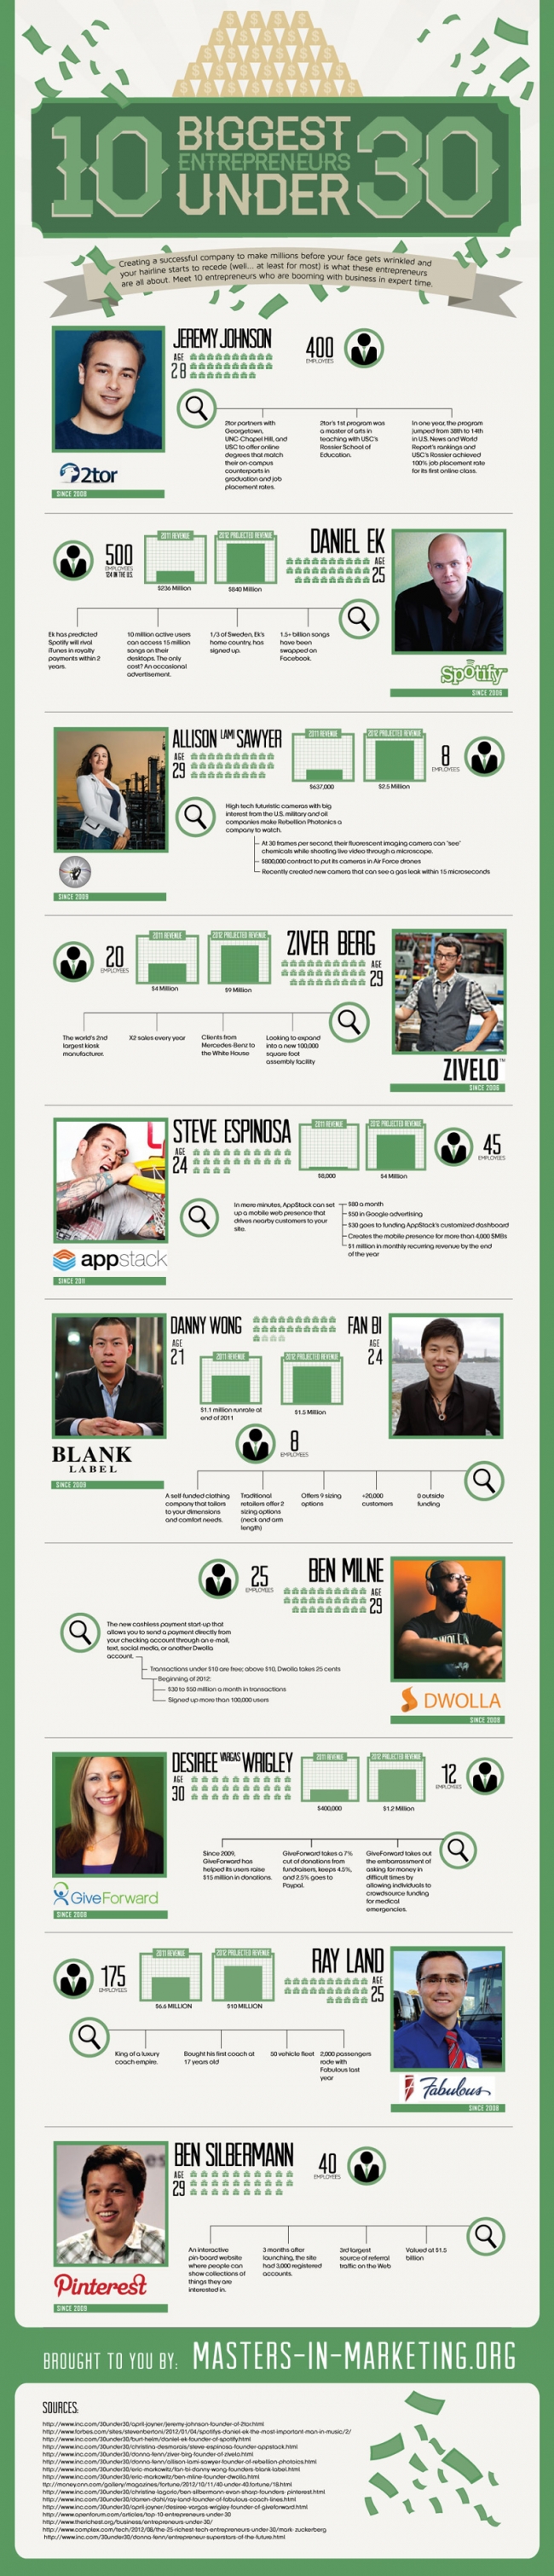 Infographic: 10 Entrepreneurs Under Thirty